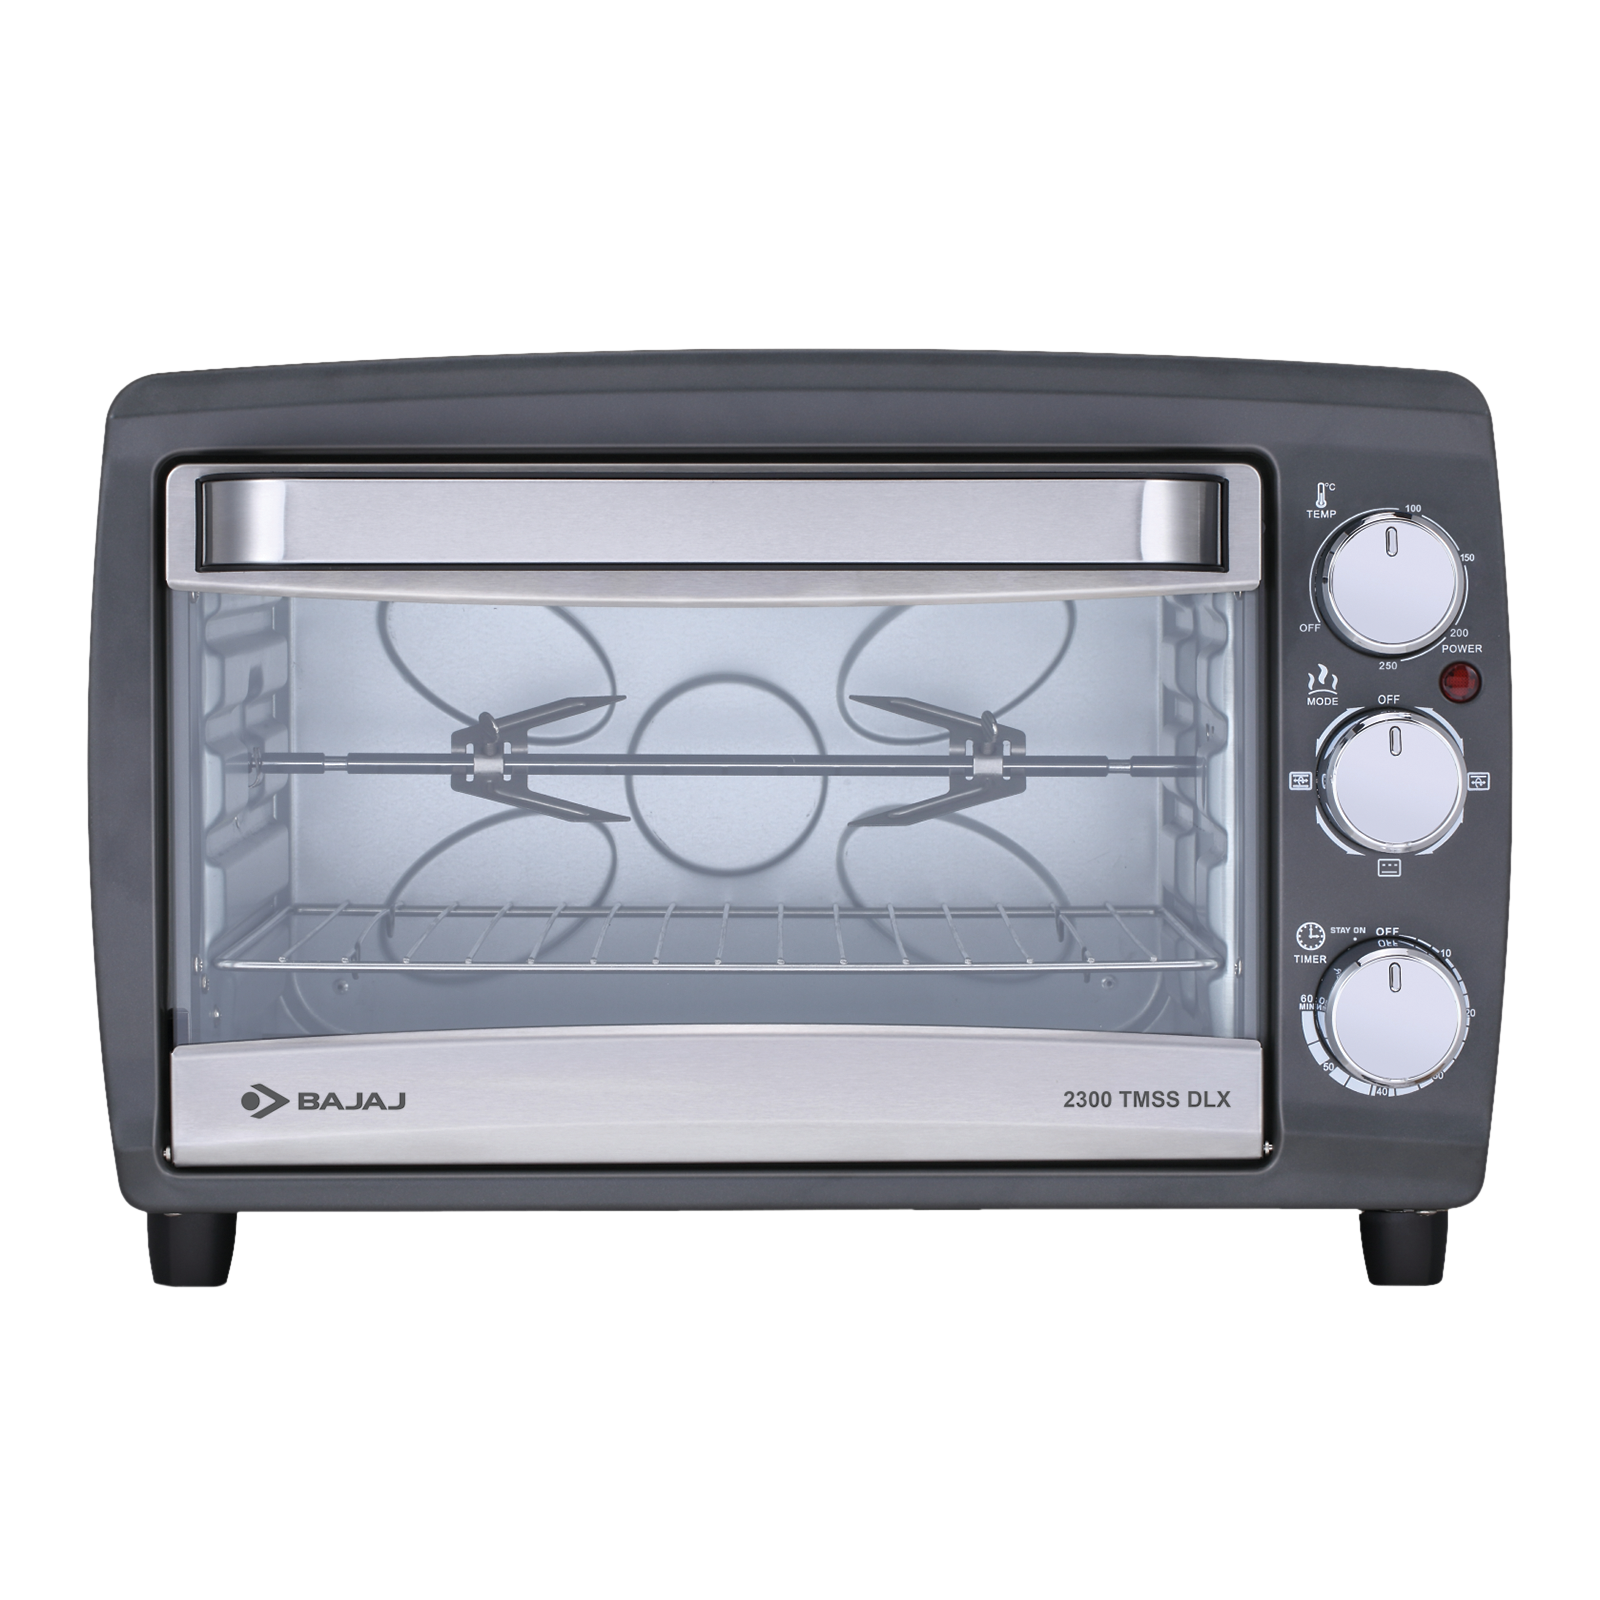 Bajaj Majesty 1603 T 16-Litre Oven Toaster Grill Review (OTG)